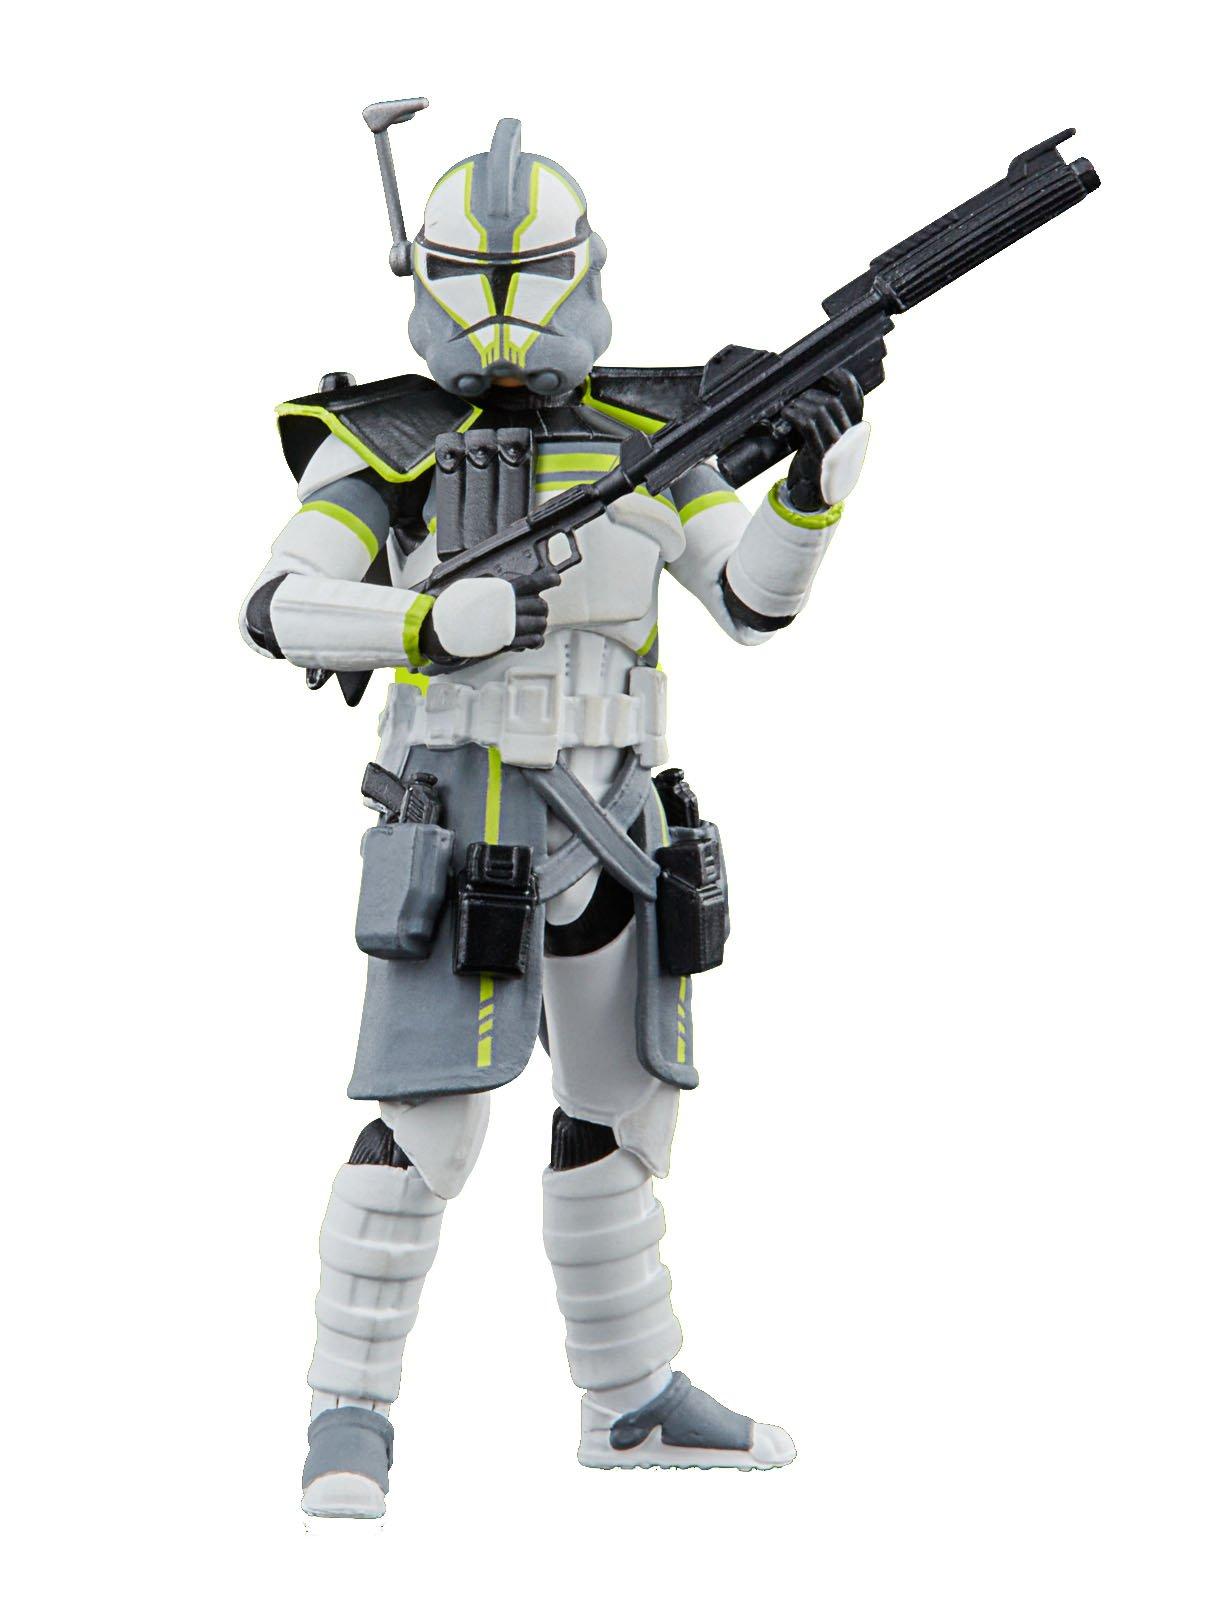 Kenner Star Wars: Battlefront II Arc Trooper 3.75-in Action Figure